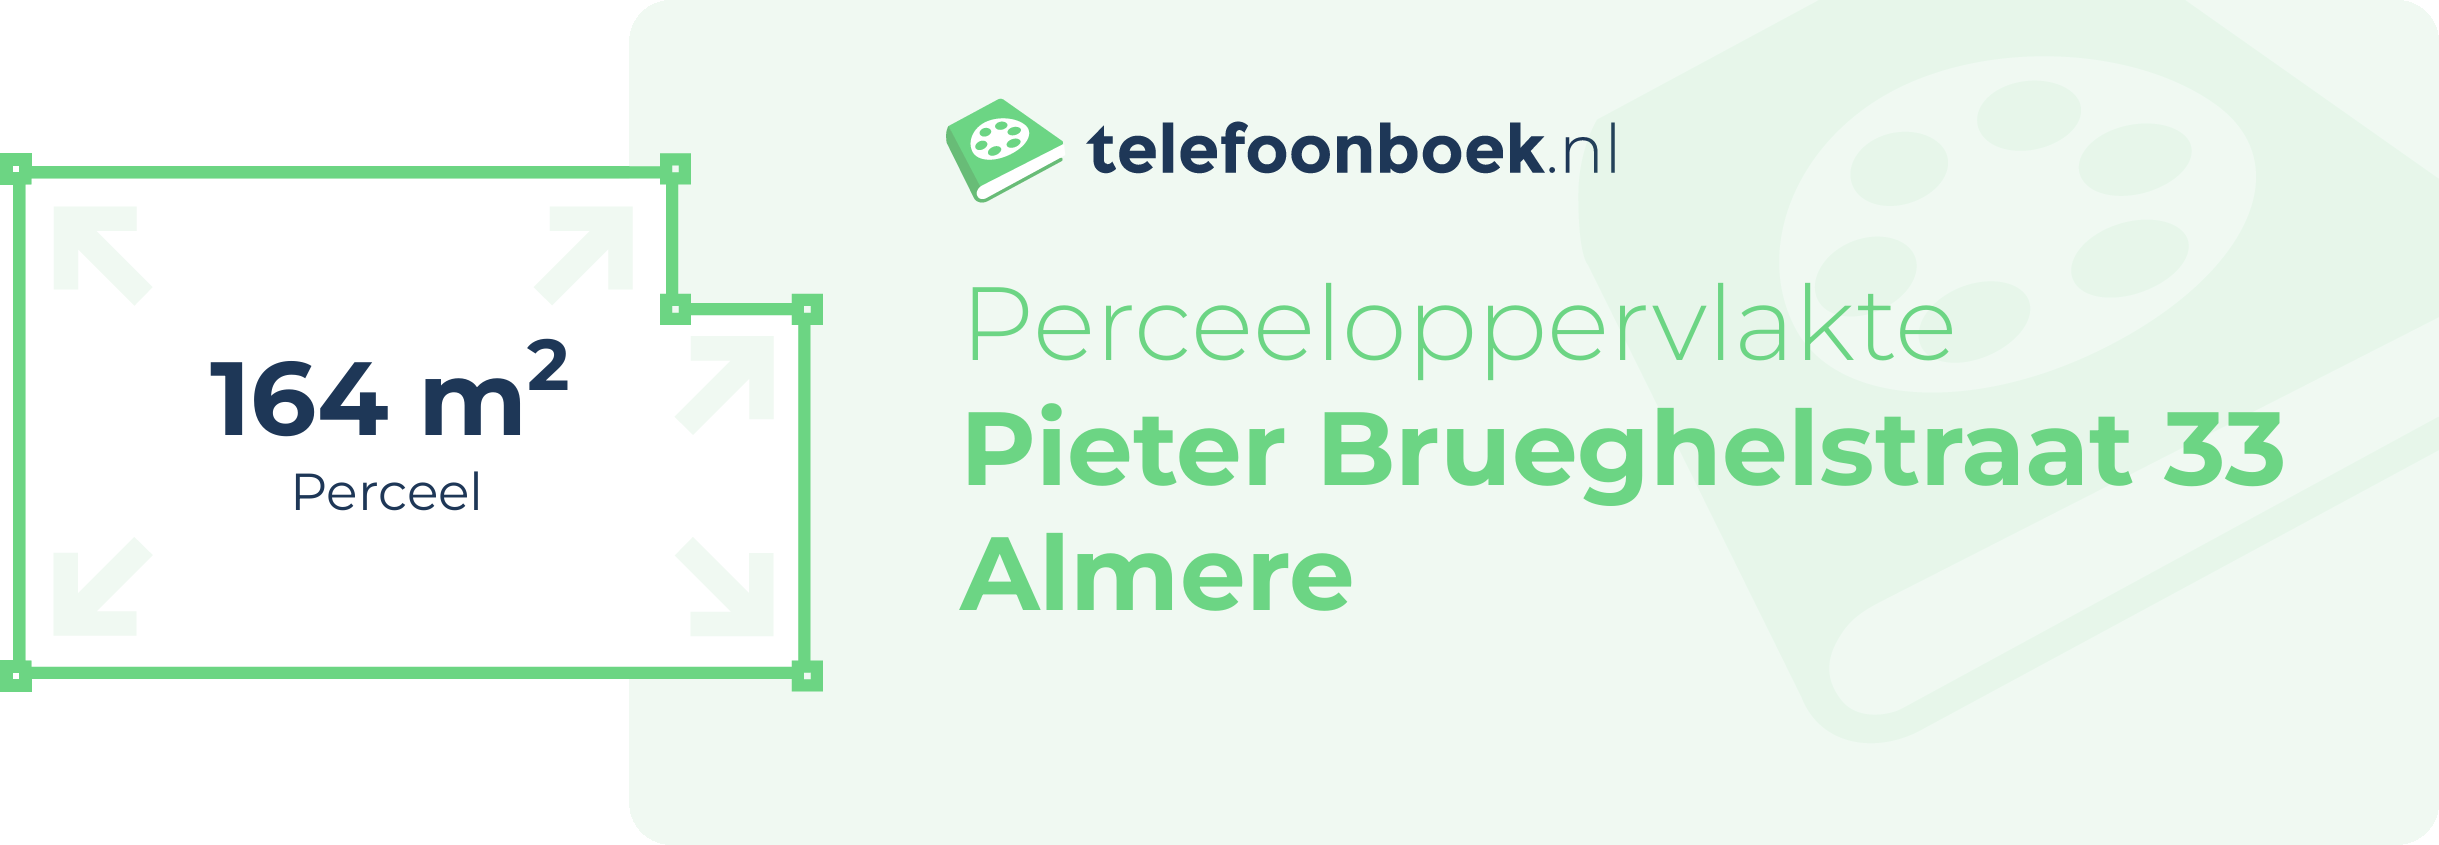 Perceeloppervlakte Pieter Brueghelstraat 33 Almere